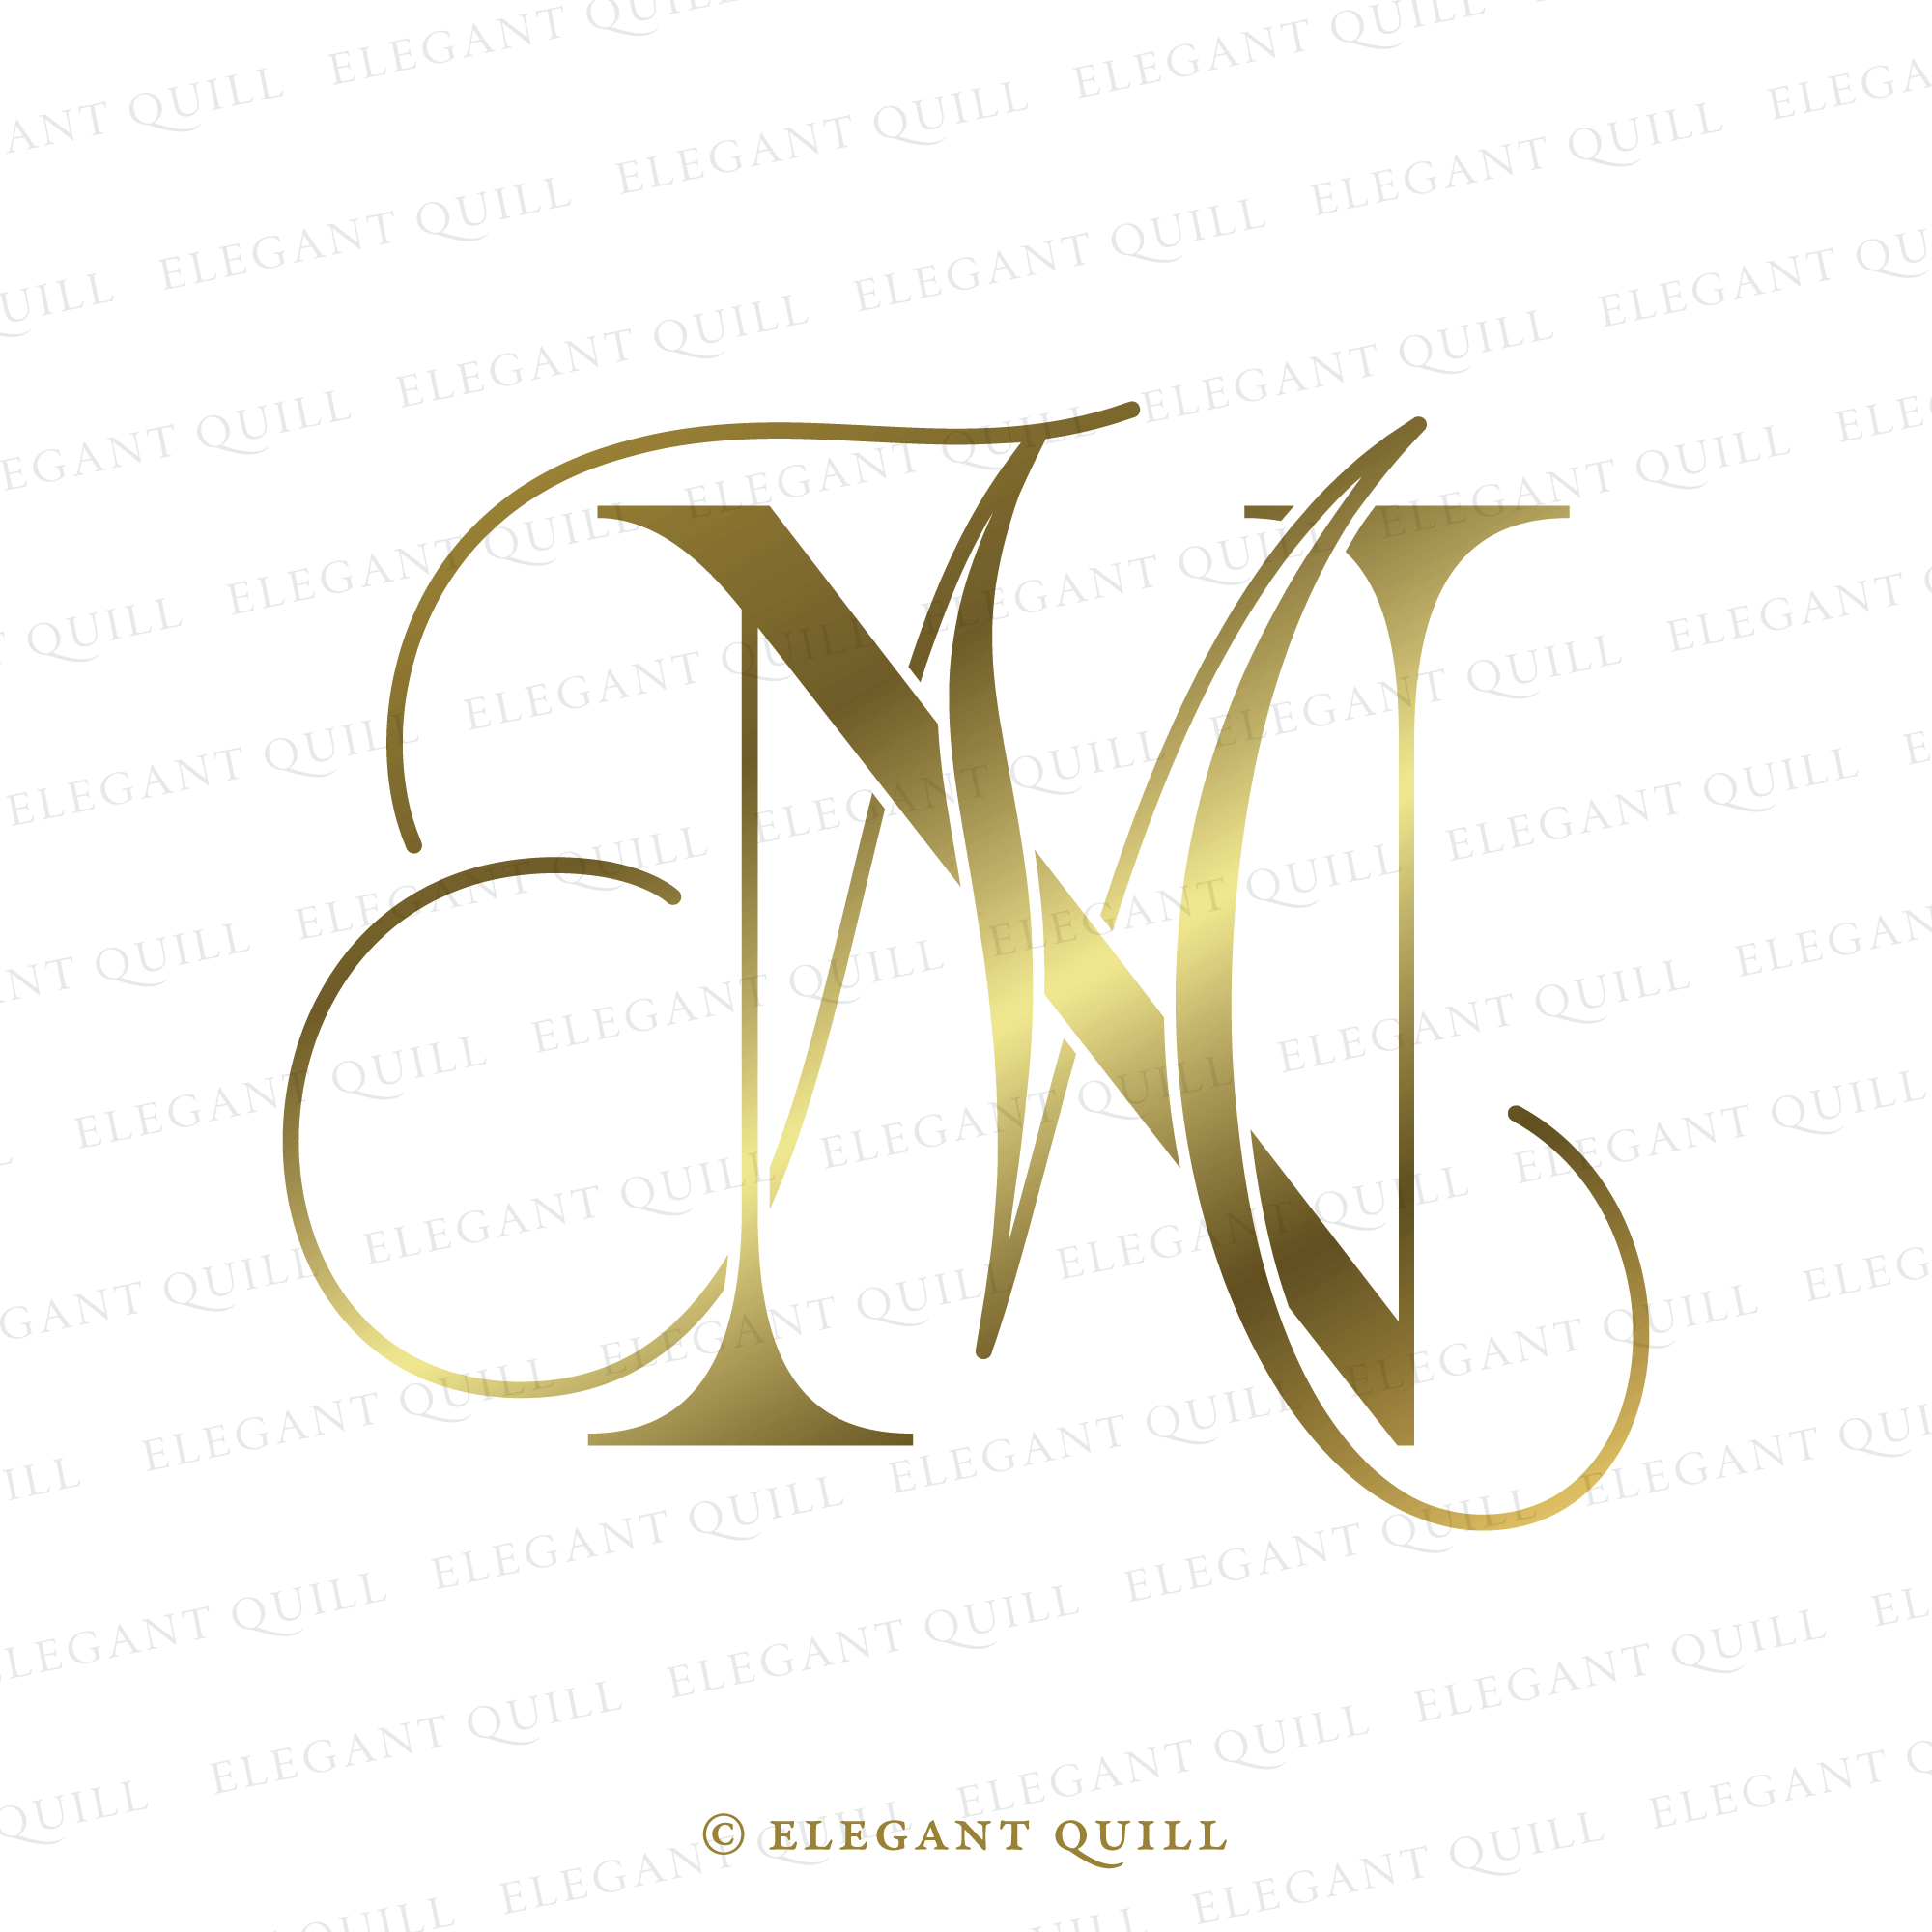 Elegant Wedding Monogram Premade Wedding Logo Design Wedding